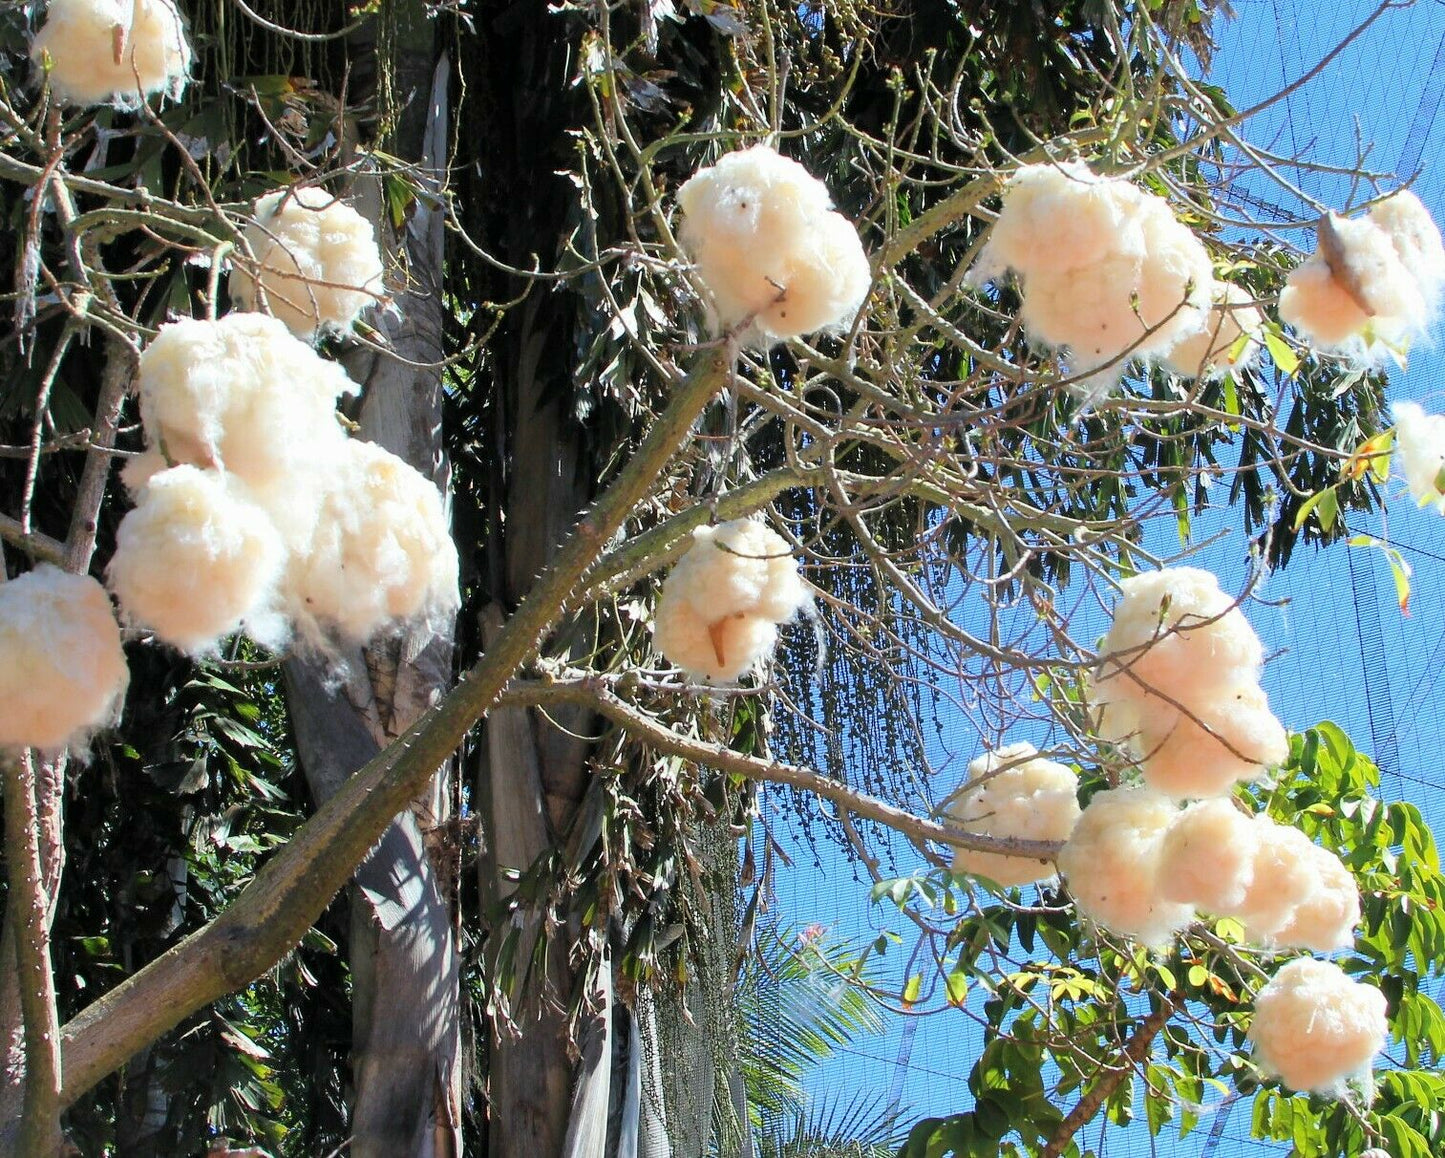 Kapok Tree Silk Cotton Tree Ceiba pentandra 20 Seeds  USA Company